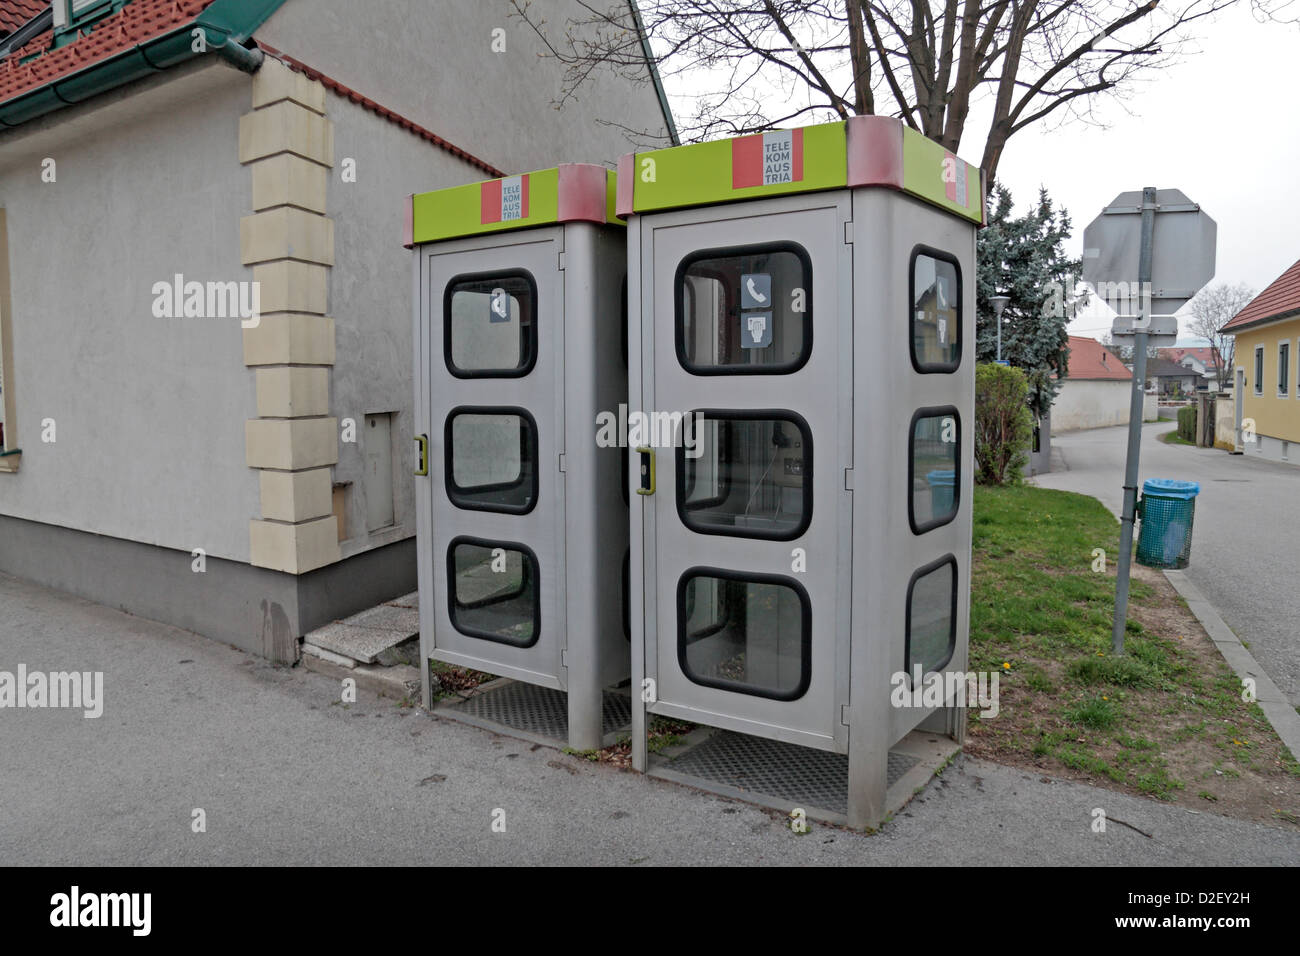 A pair of Telecom Austria telephone boxes/kiosks in Trausdorf, near Vienna, Austria. Stock Photo